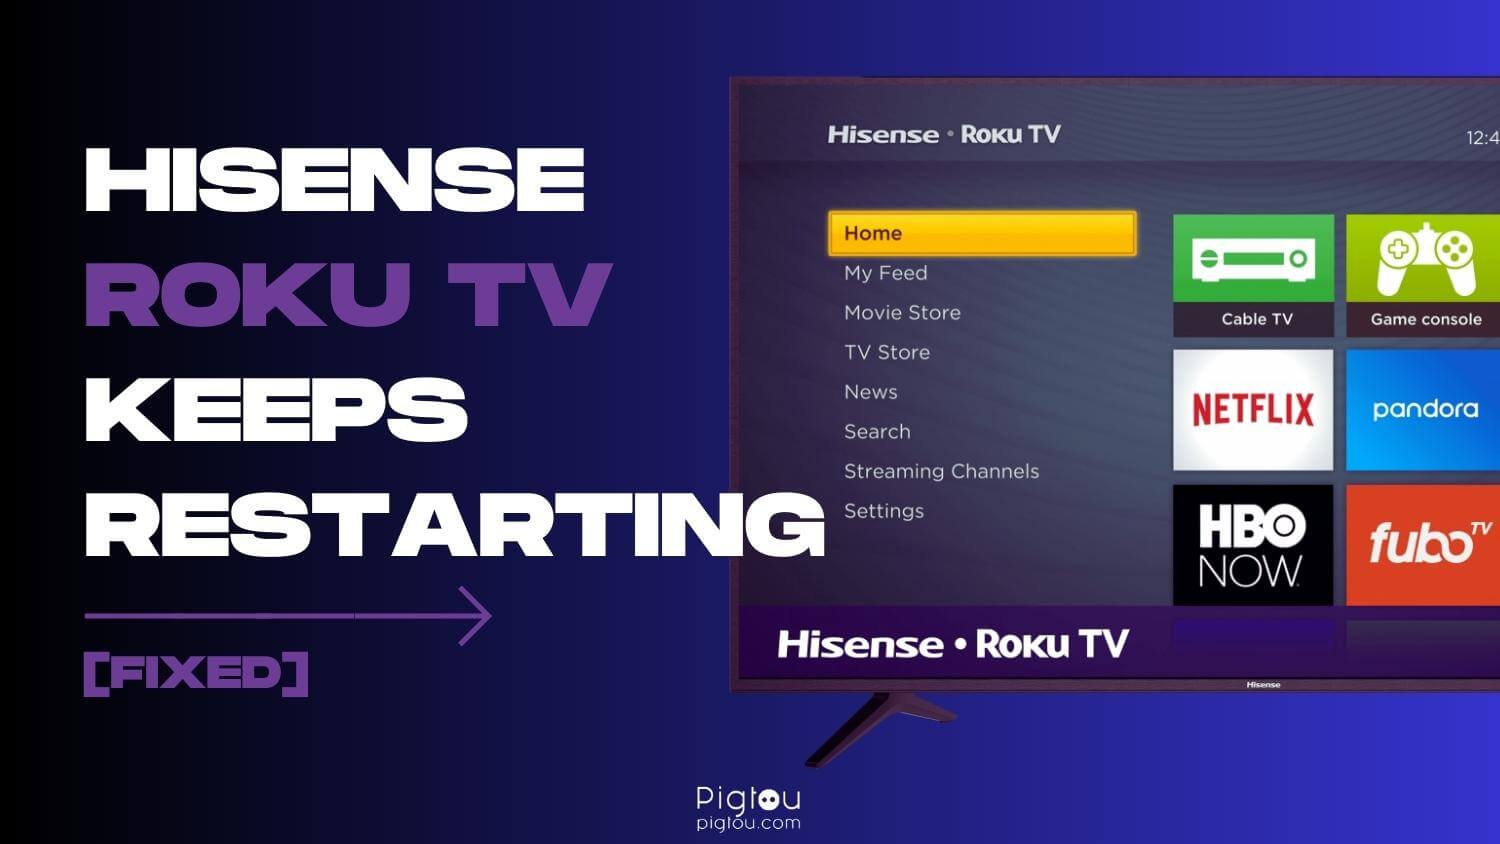 Hisense Roku TV Keeps Restarting [FIXED!]